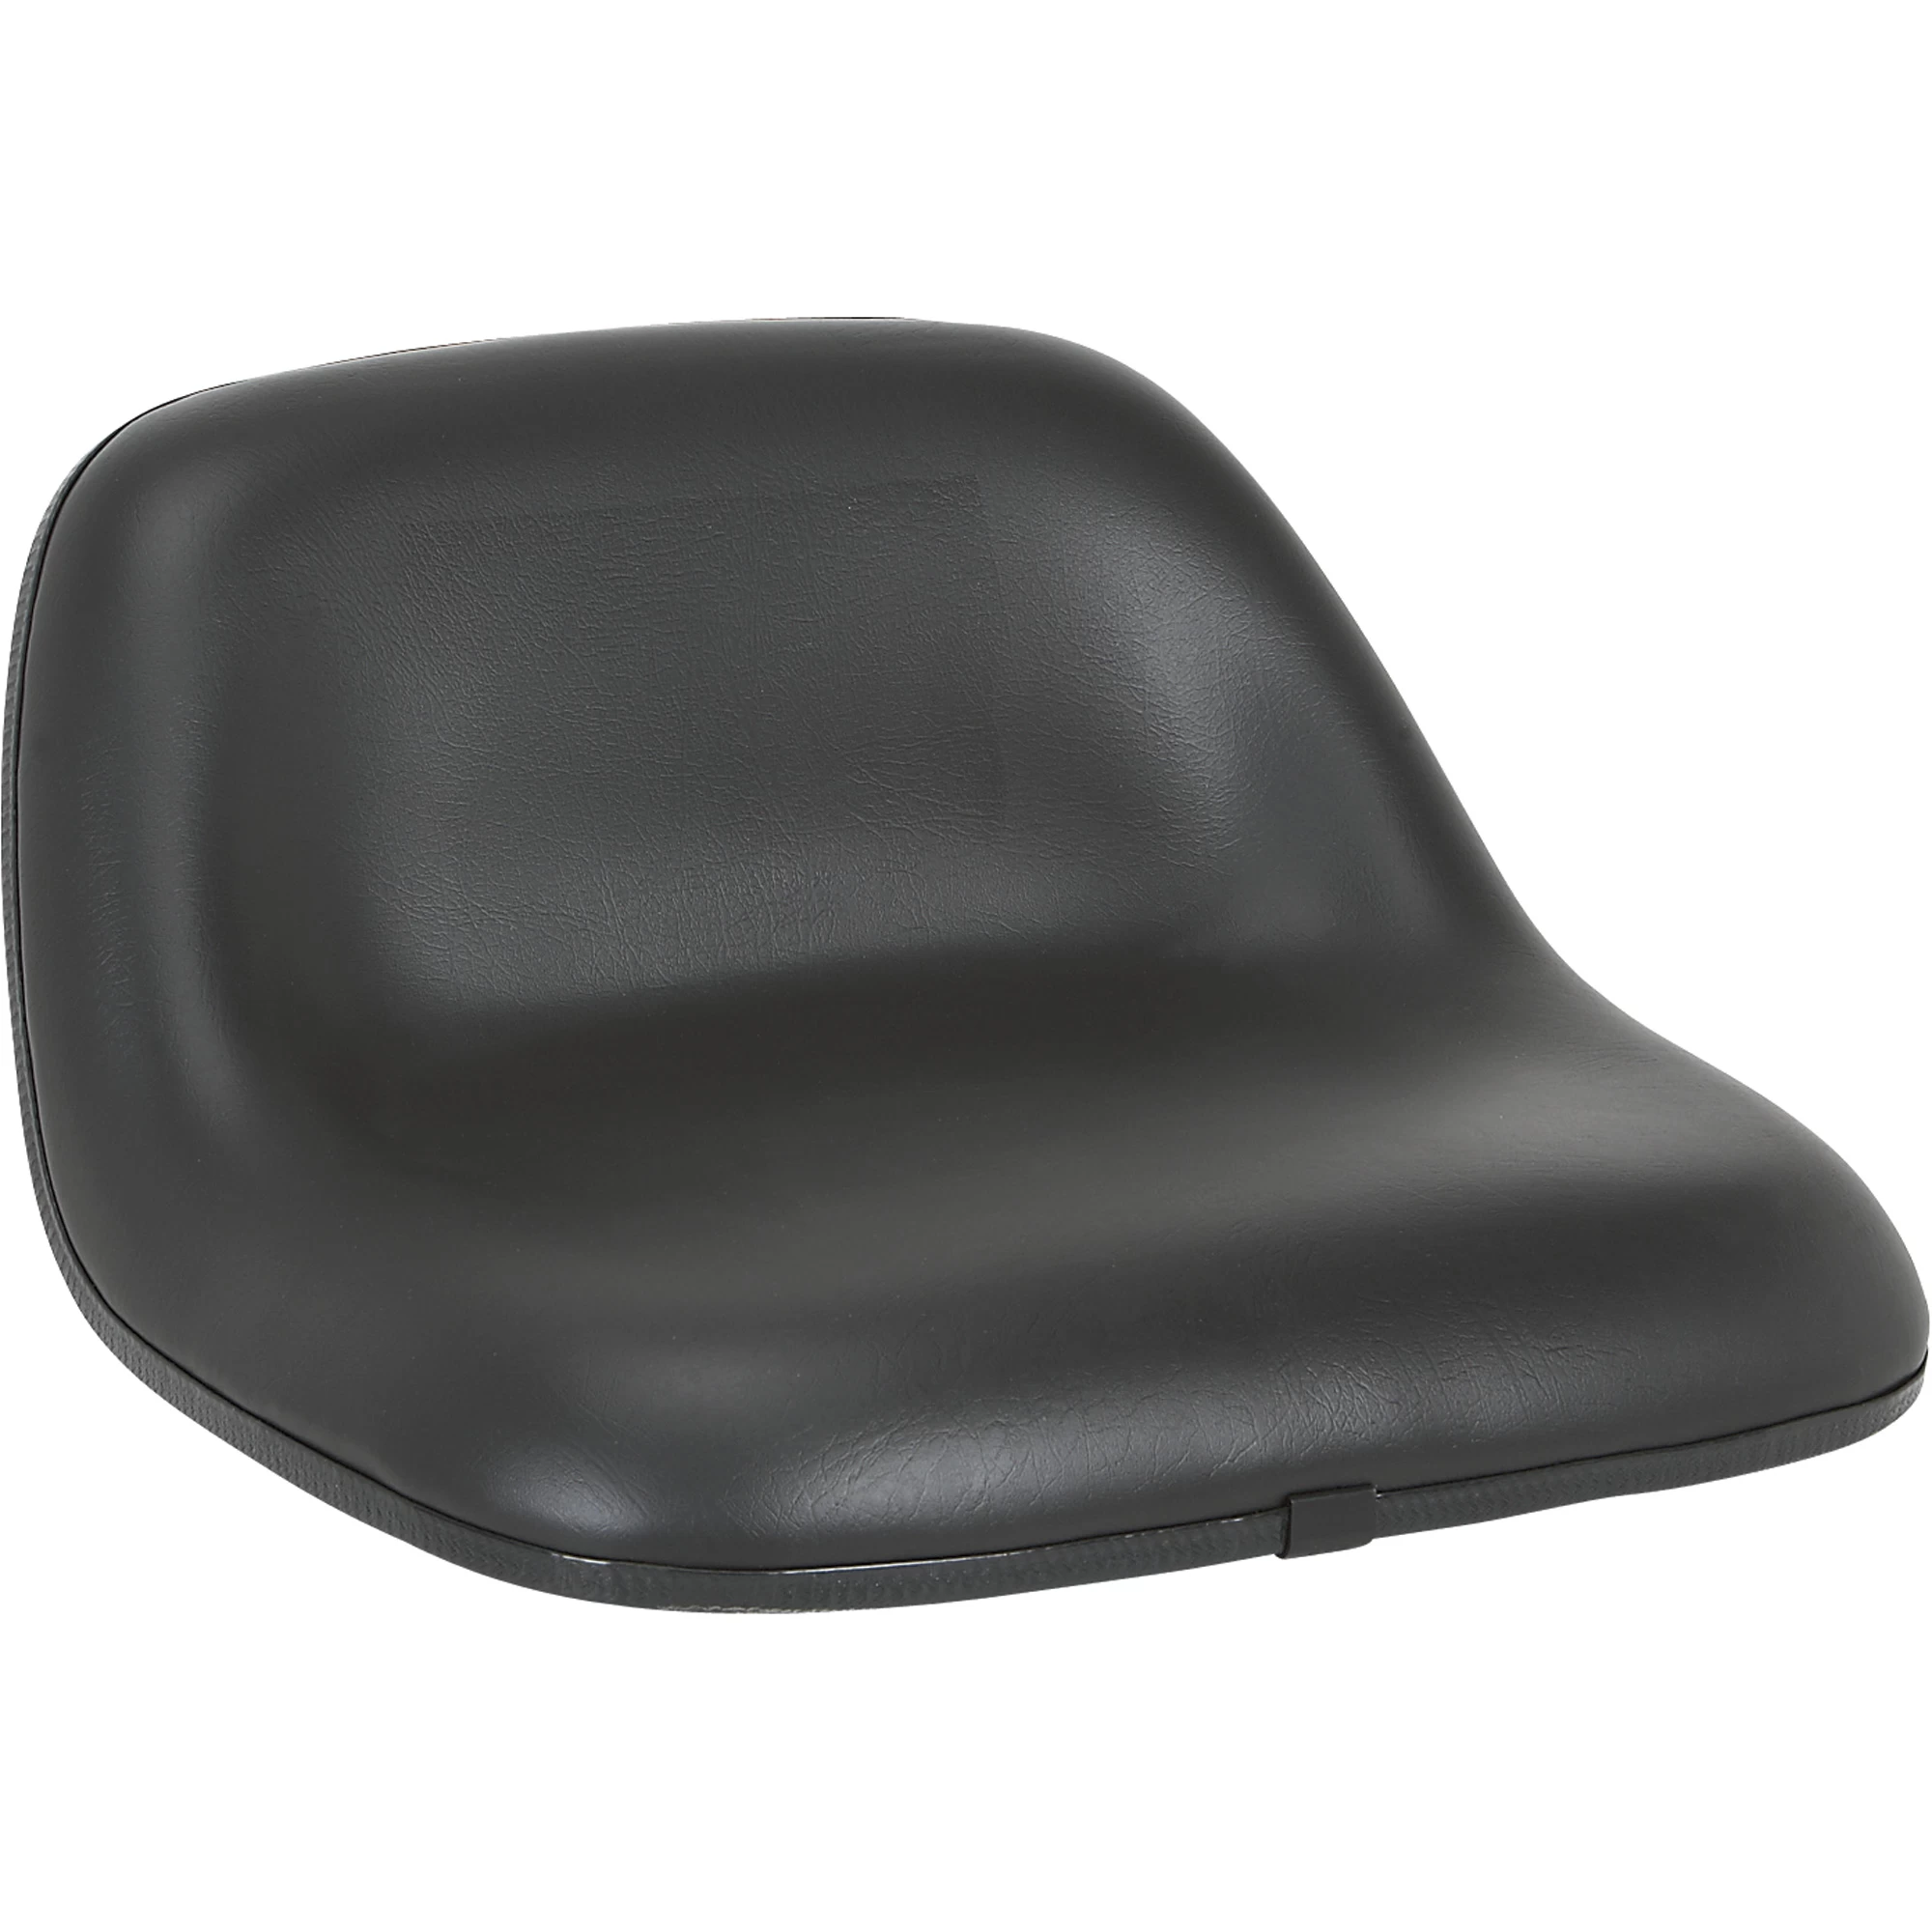 chair seat cushions,office chair seat,polyurethane tractor seat cushion,car seat pad